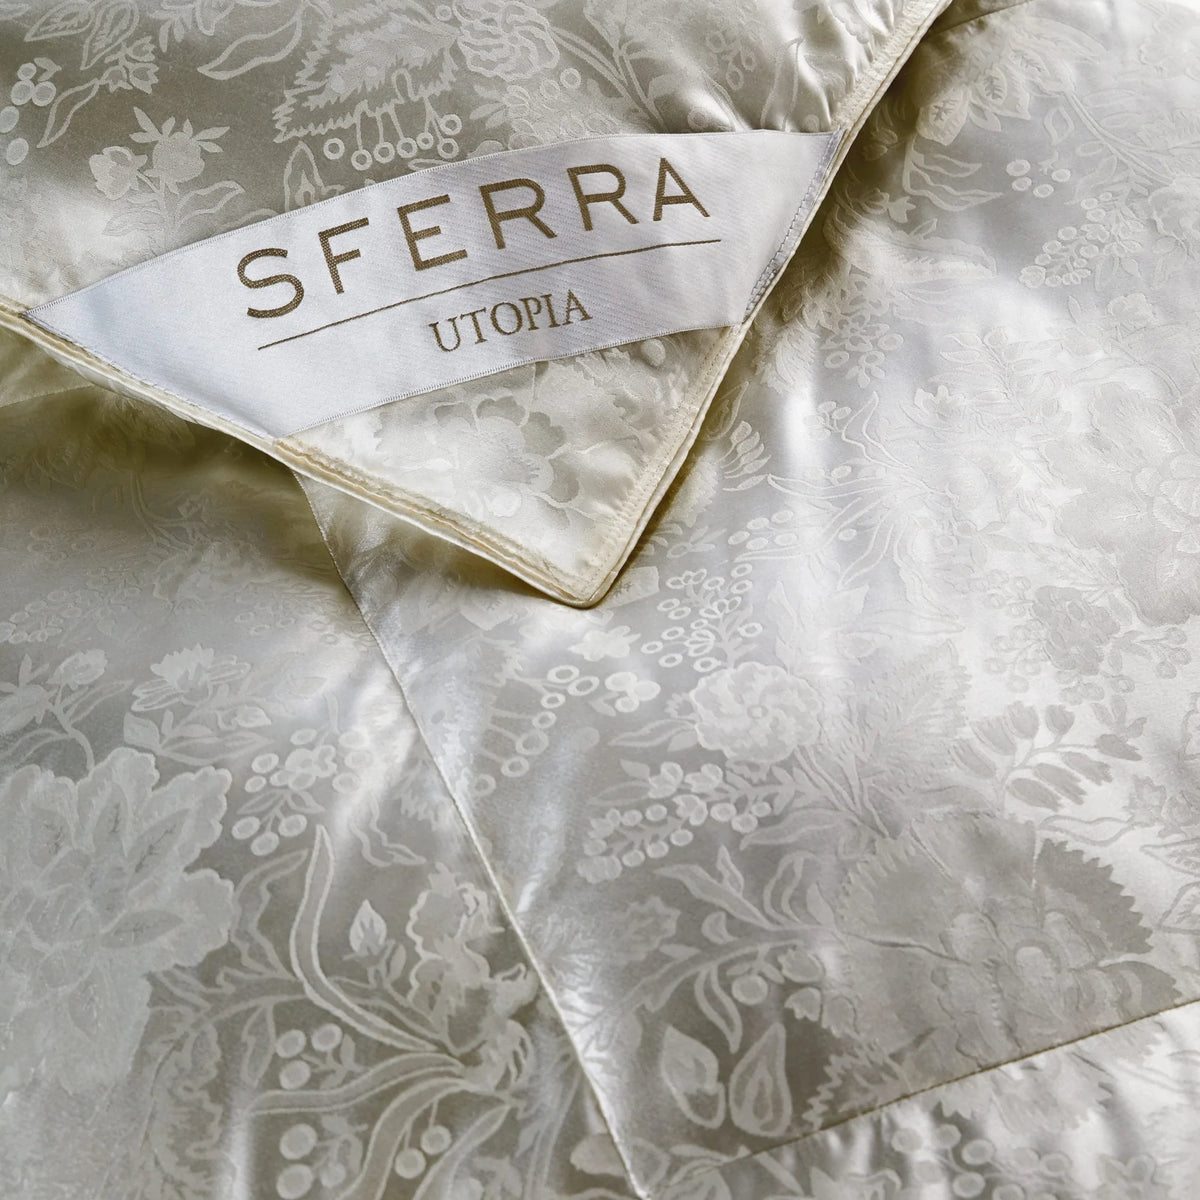 Closeup of Sferra Utopia Branding